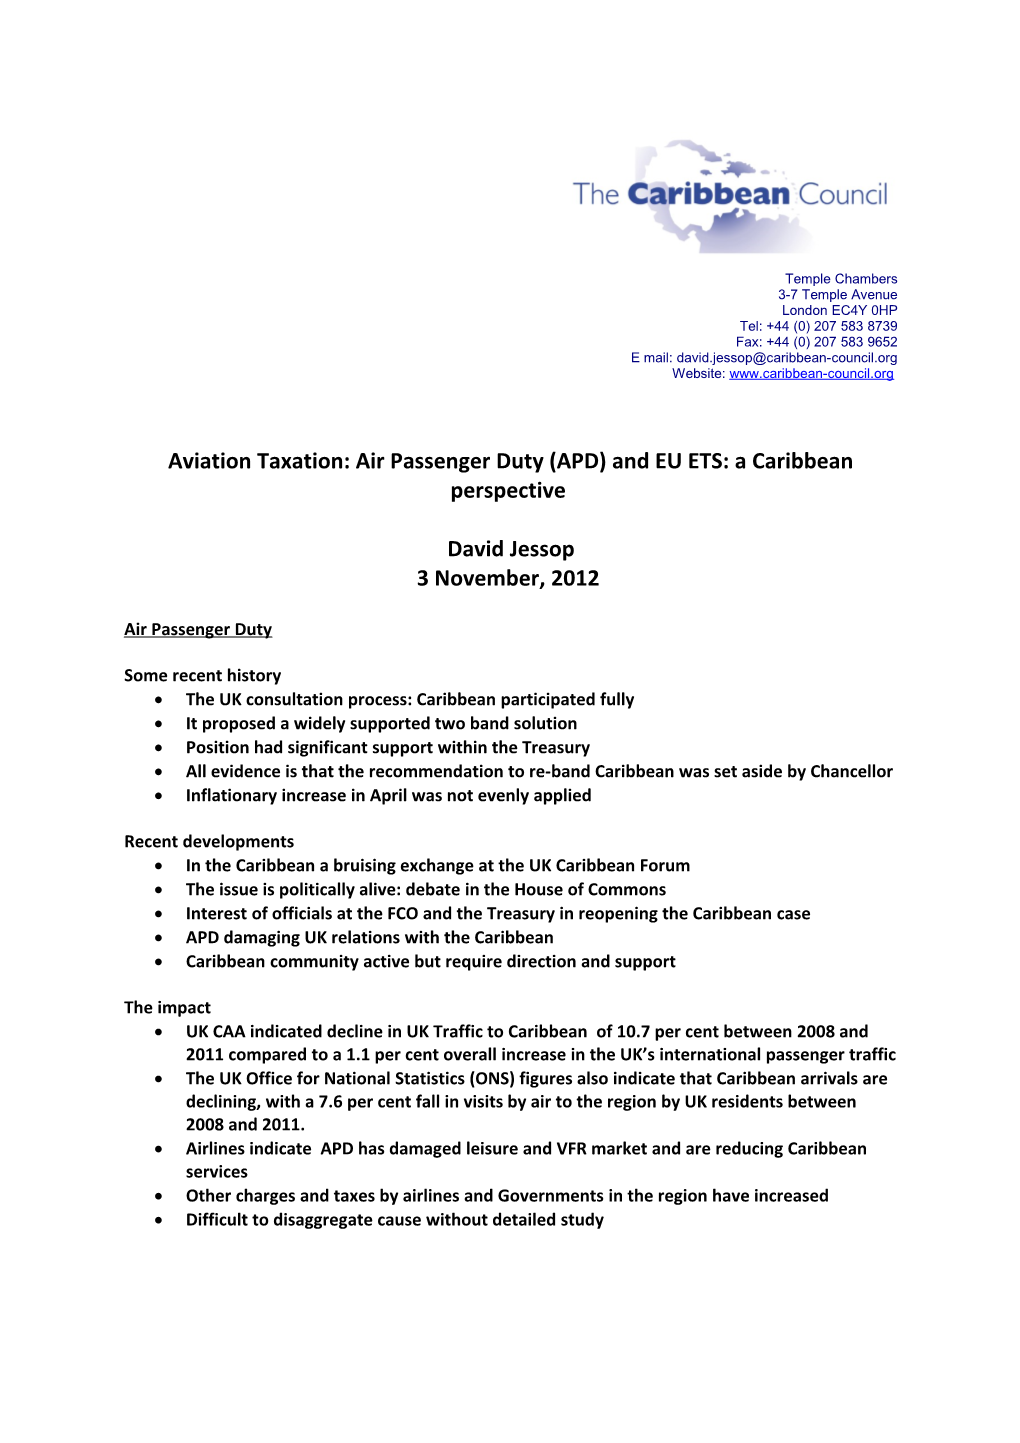 Aviation Taxation: Air Passenger Duty (APD) and EU ETS: a Caribbean Perspective